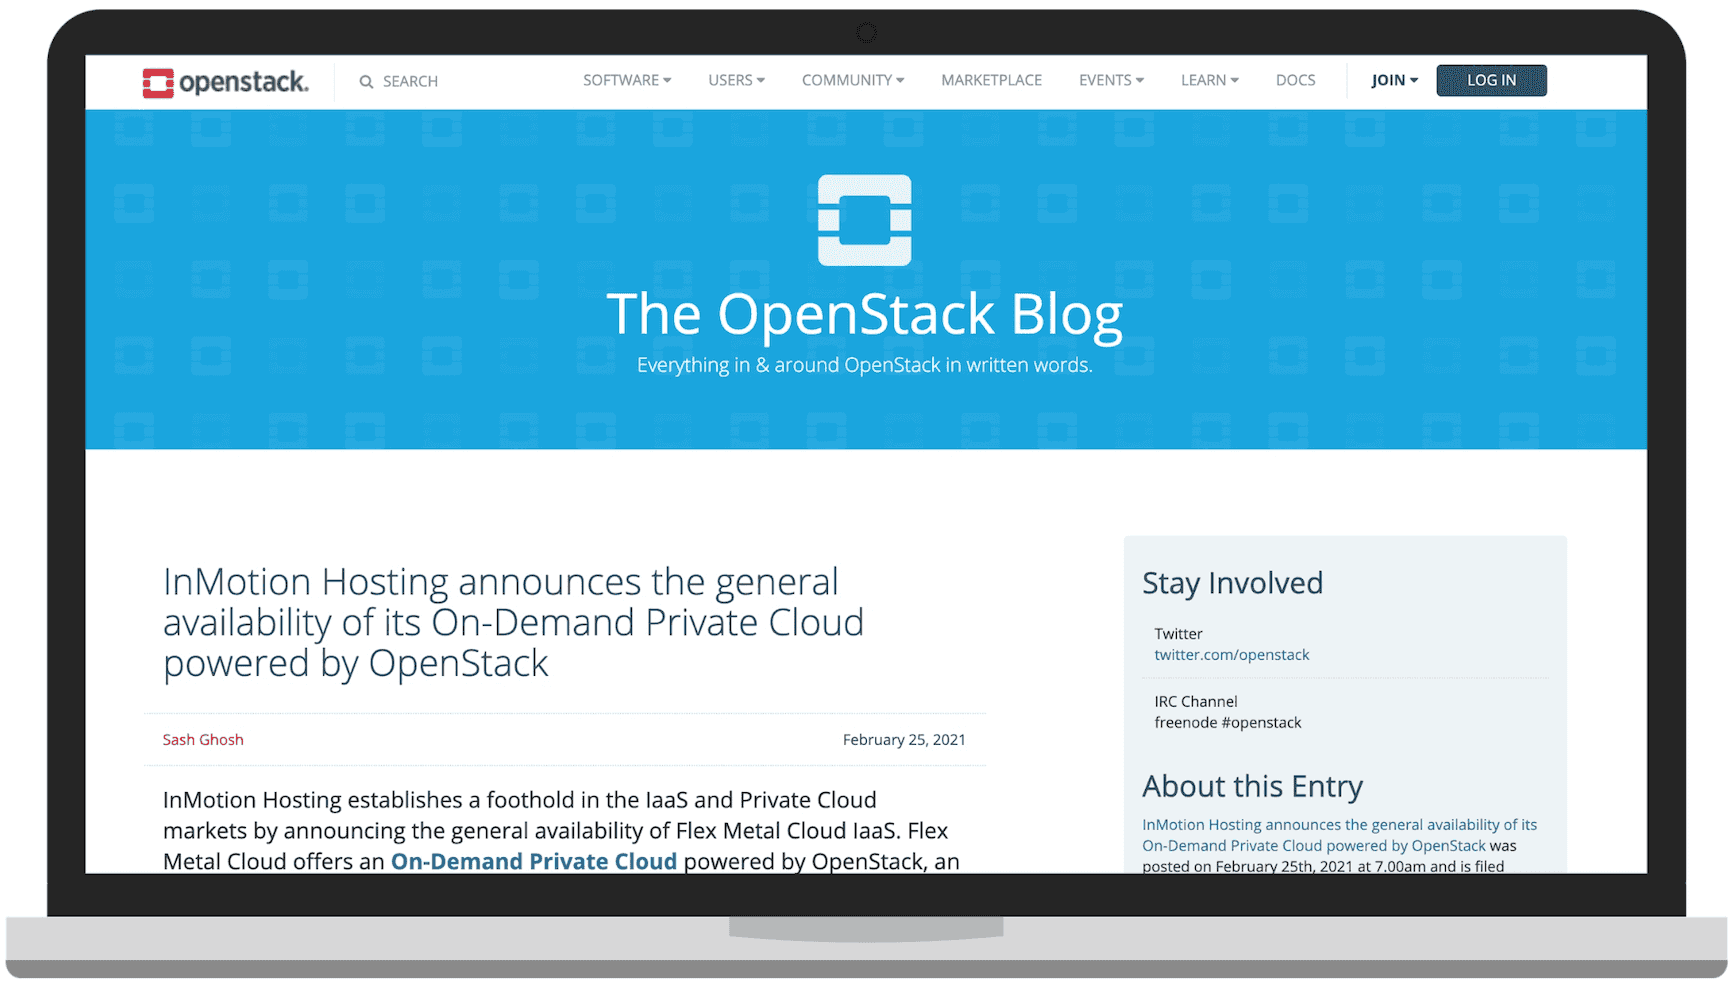 OpenStack blog InMotion Hosting